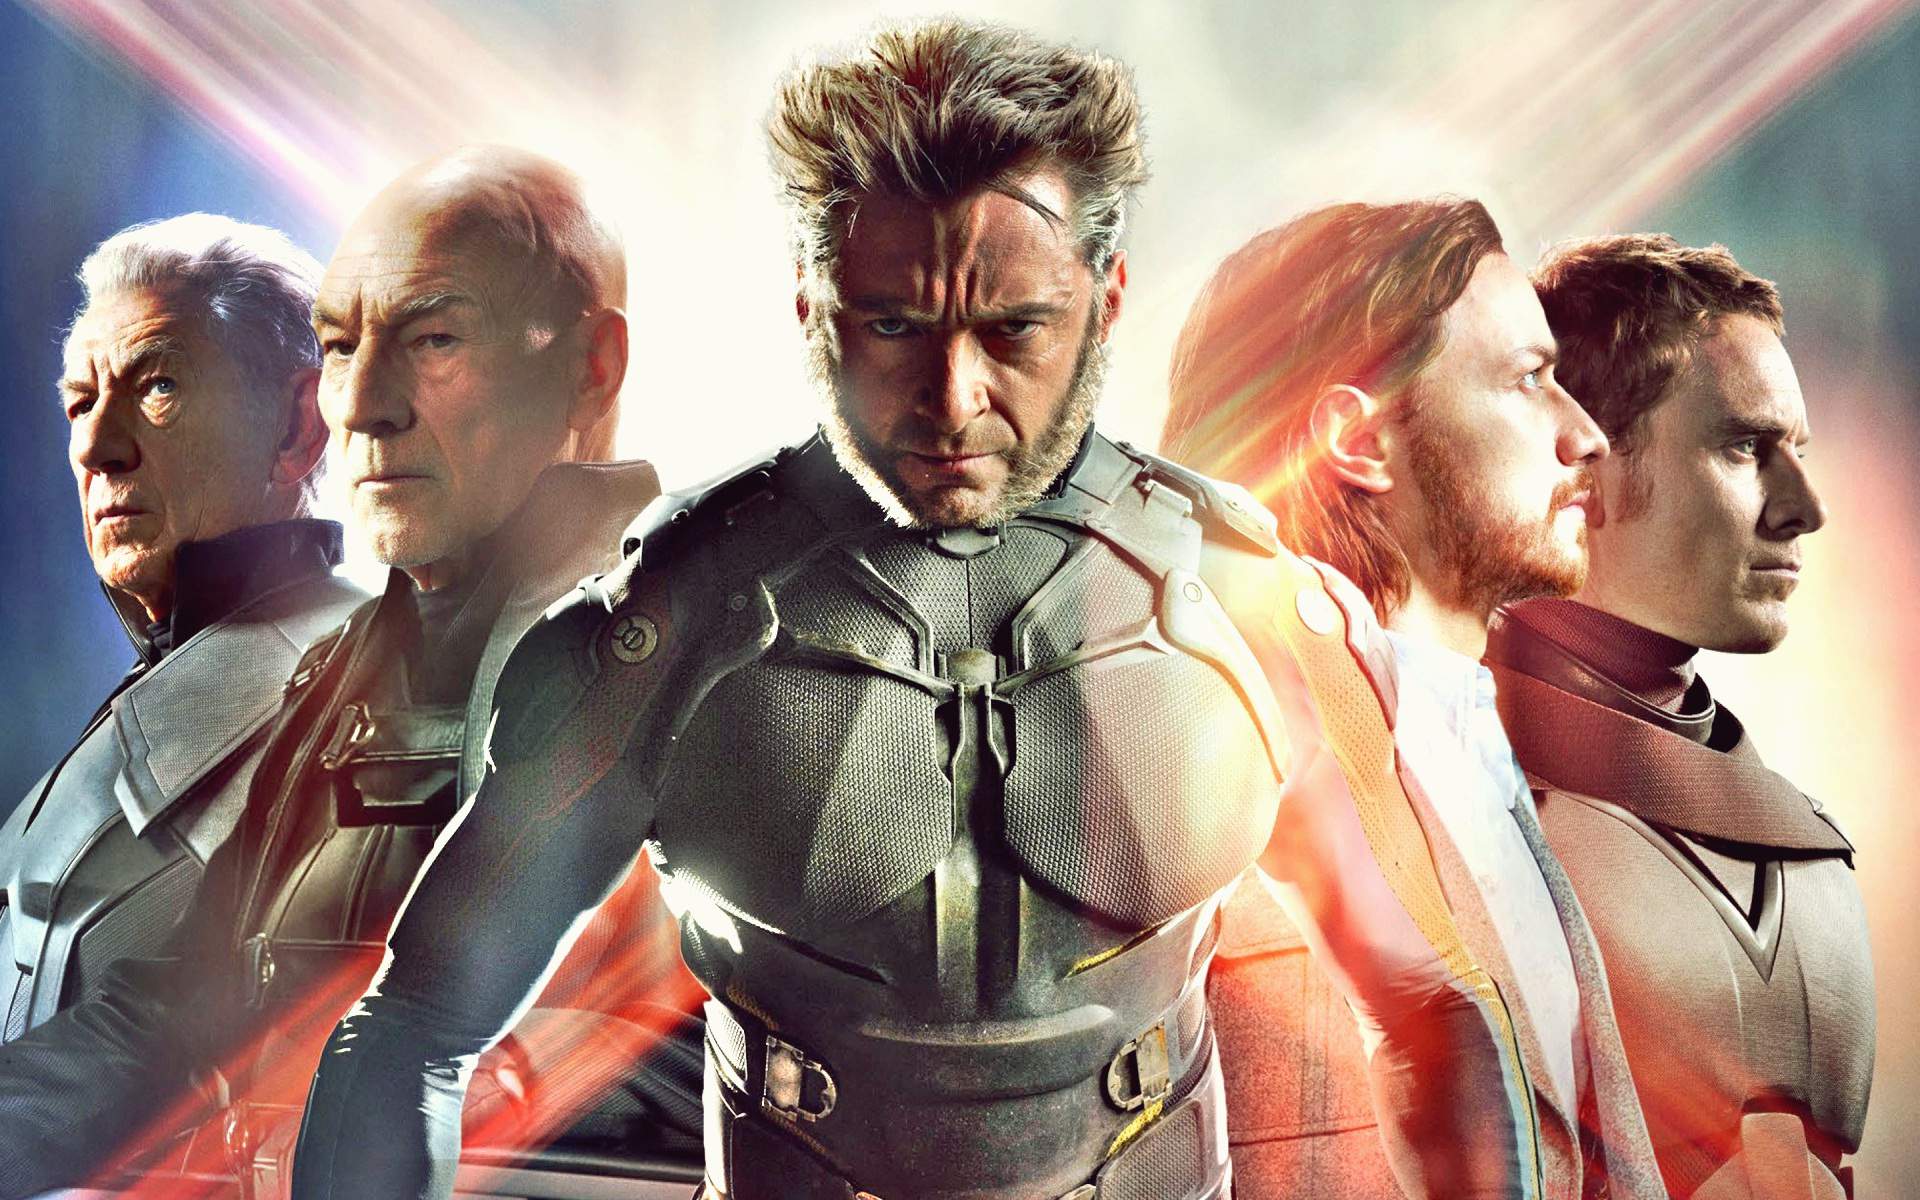 Peliculeando: ‘Blended,’ ‘X-Men: Days Of Future Past’